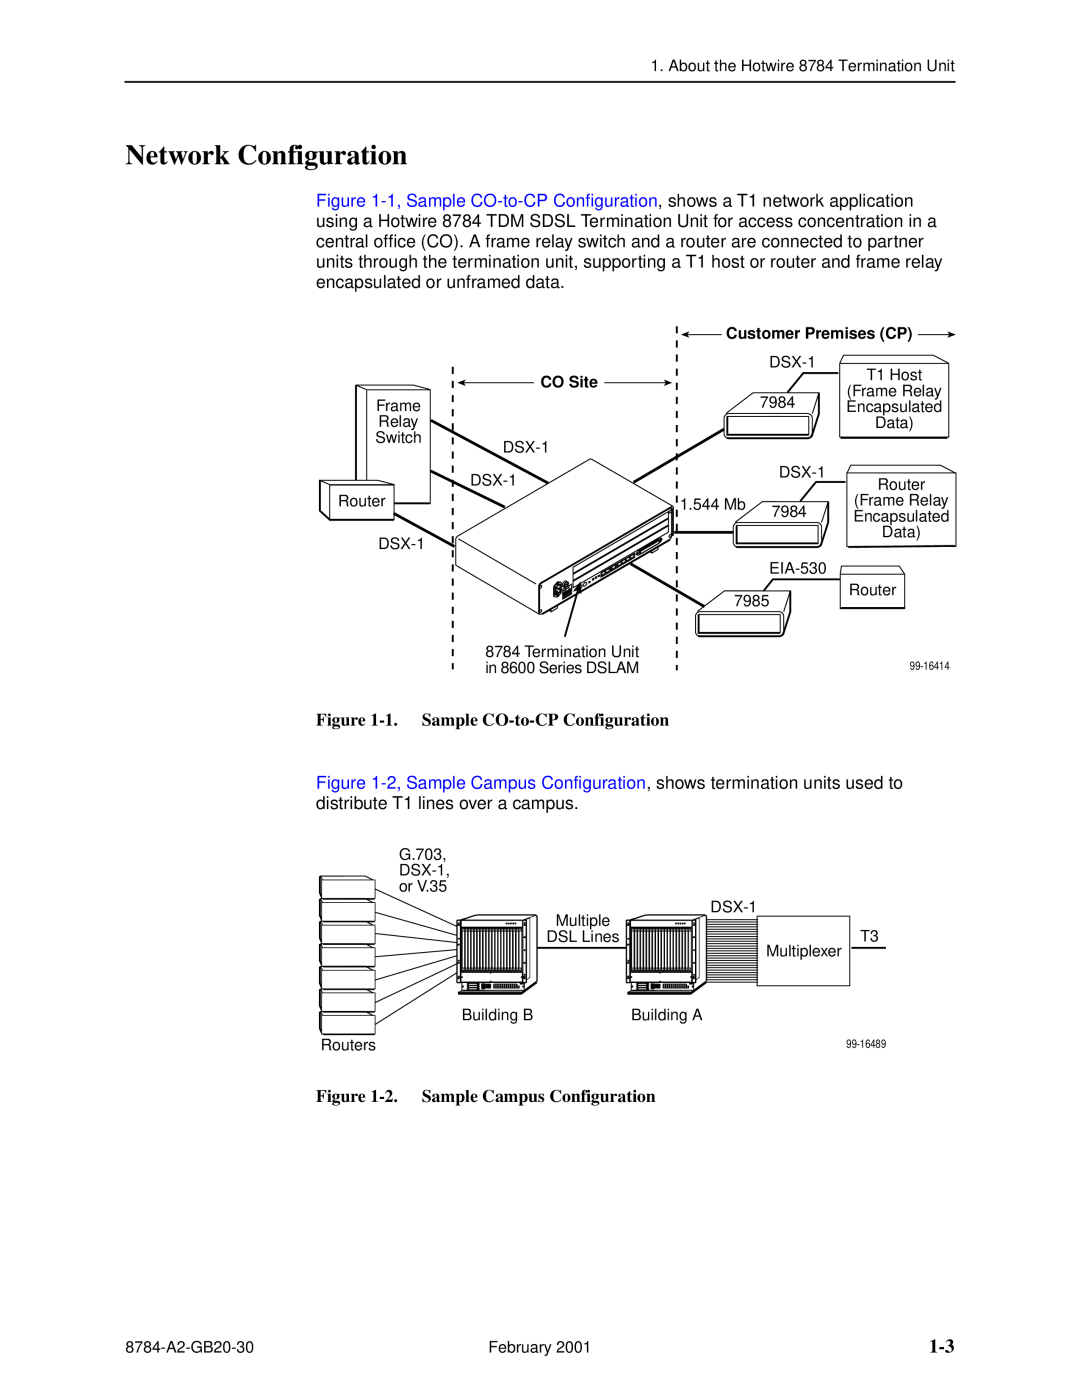 Paradyne 8784 manual Network Configuration, 1. Sample CO-to-CP Configuration, 2. Sample Campus Configuration 